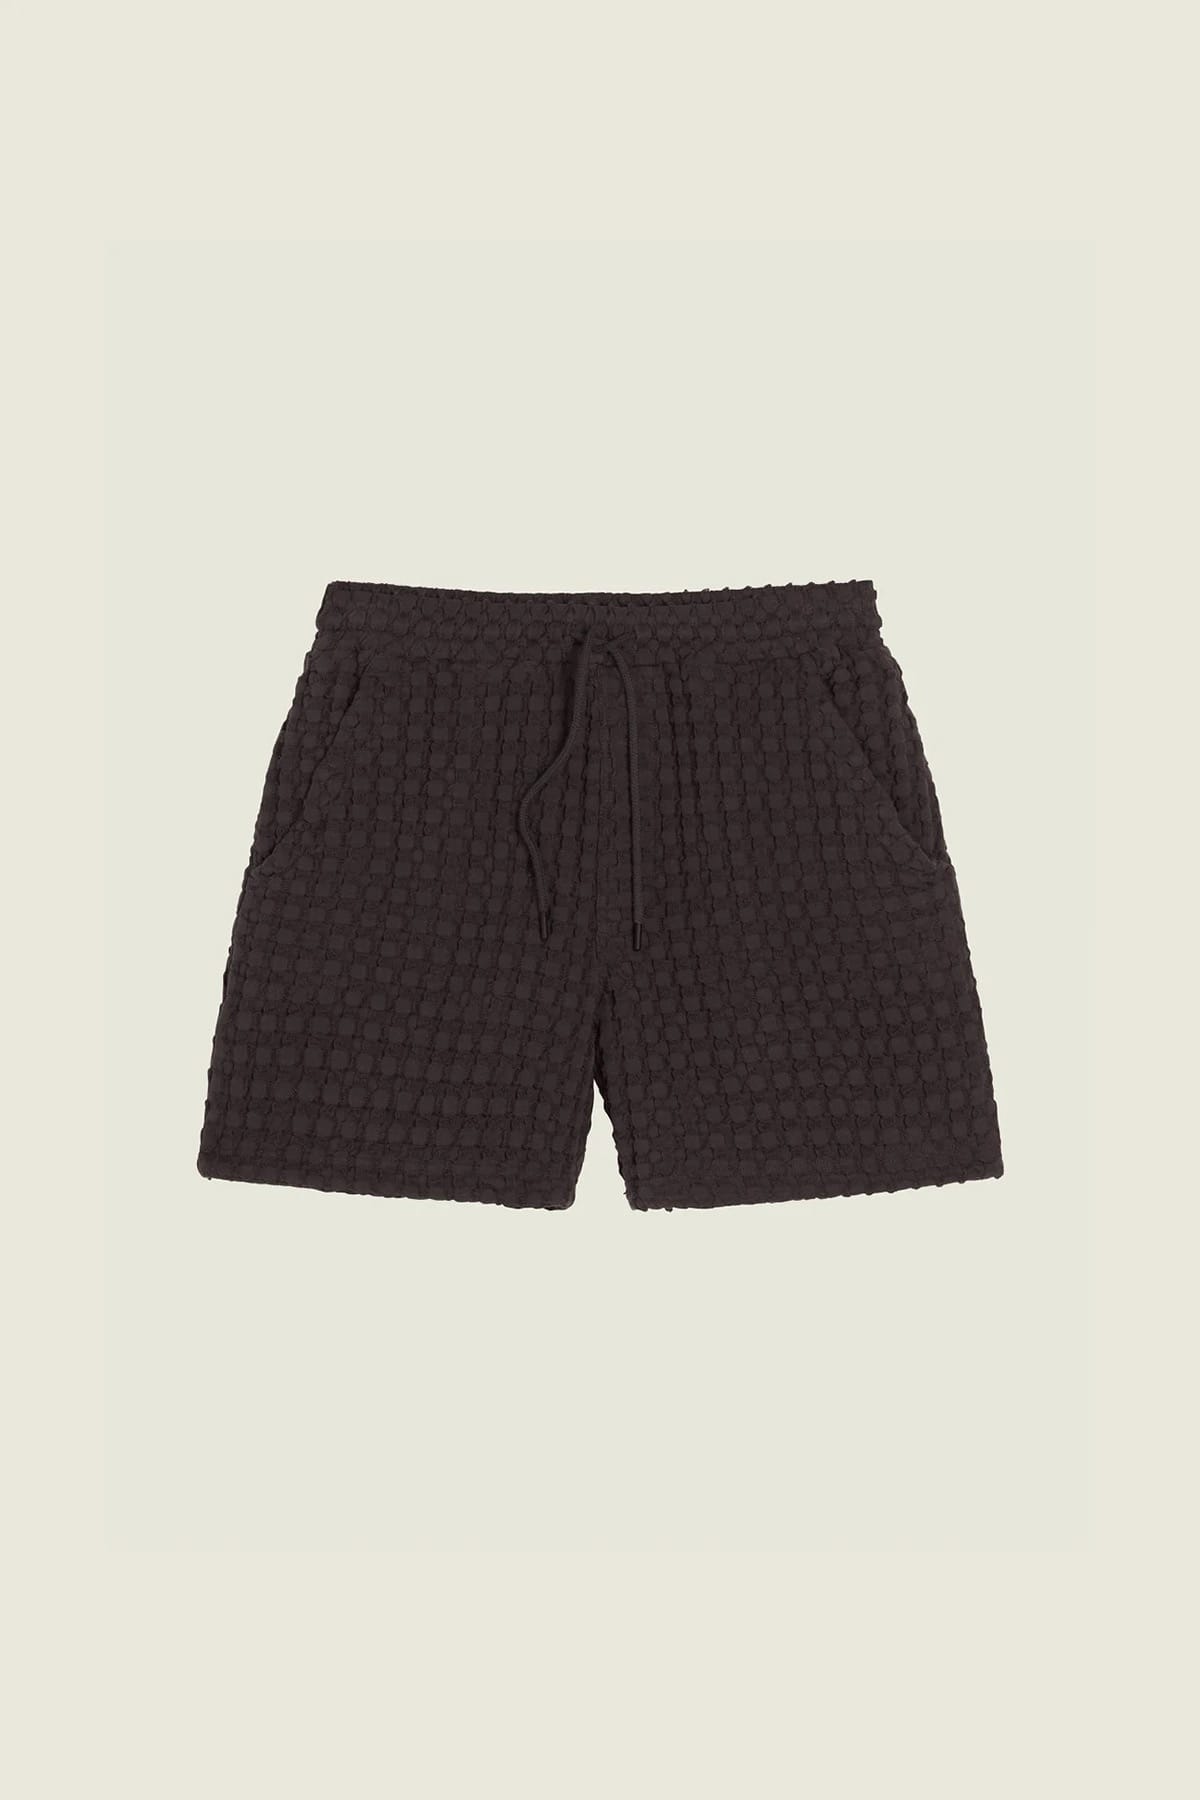 Shorts Nearly Black Porto Waffle Shorts Shorts OAS 